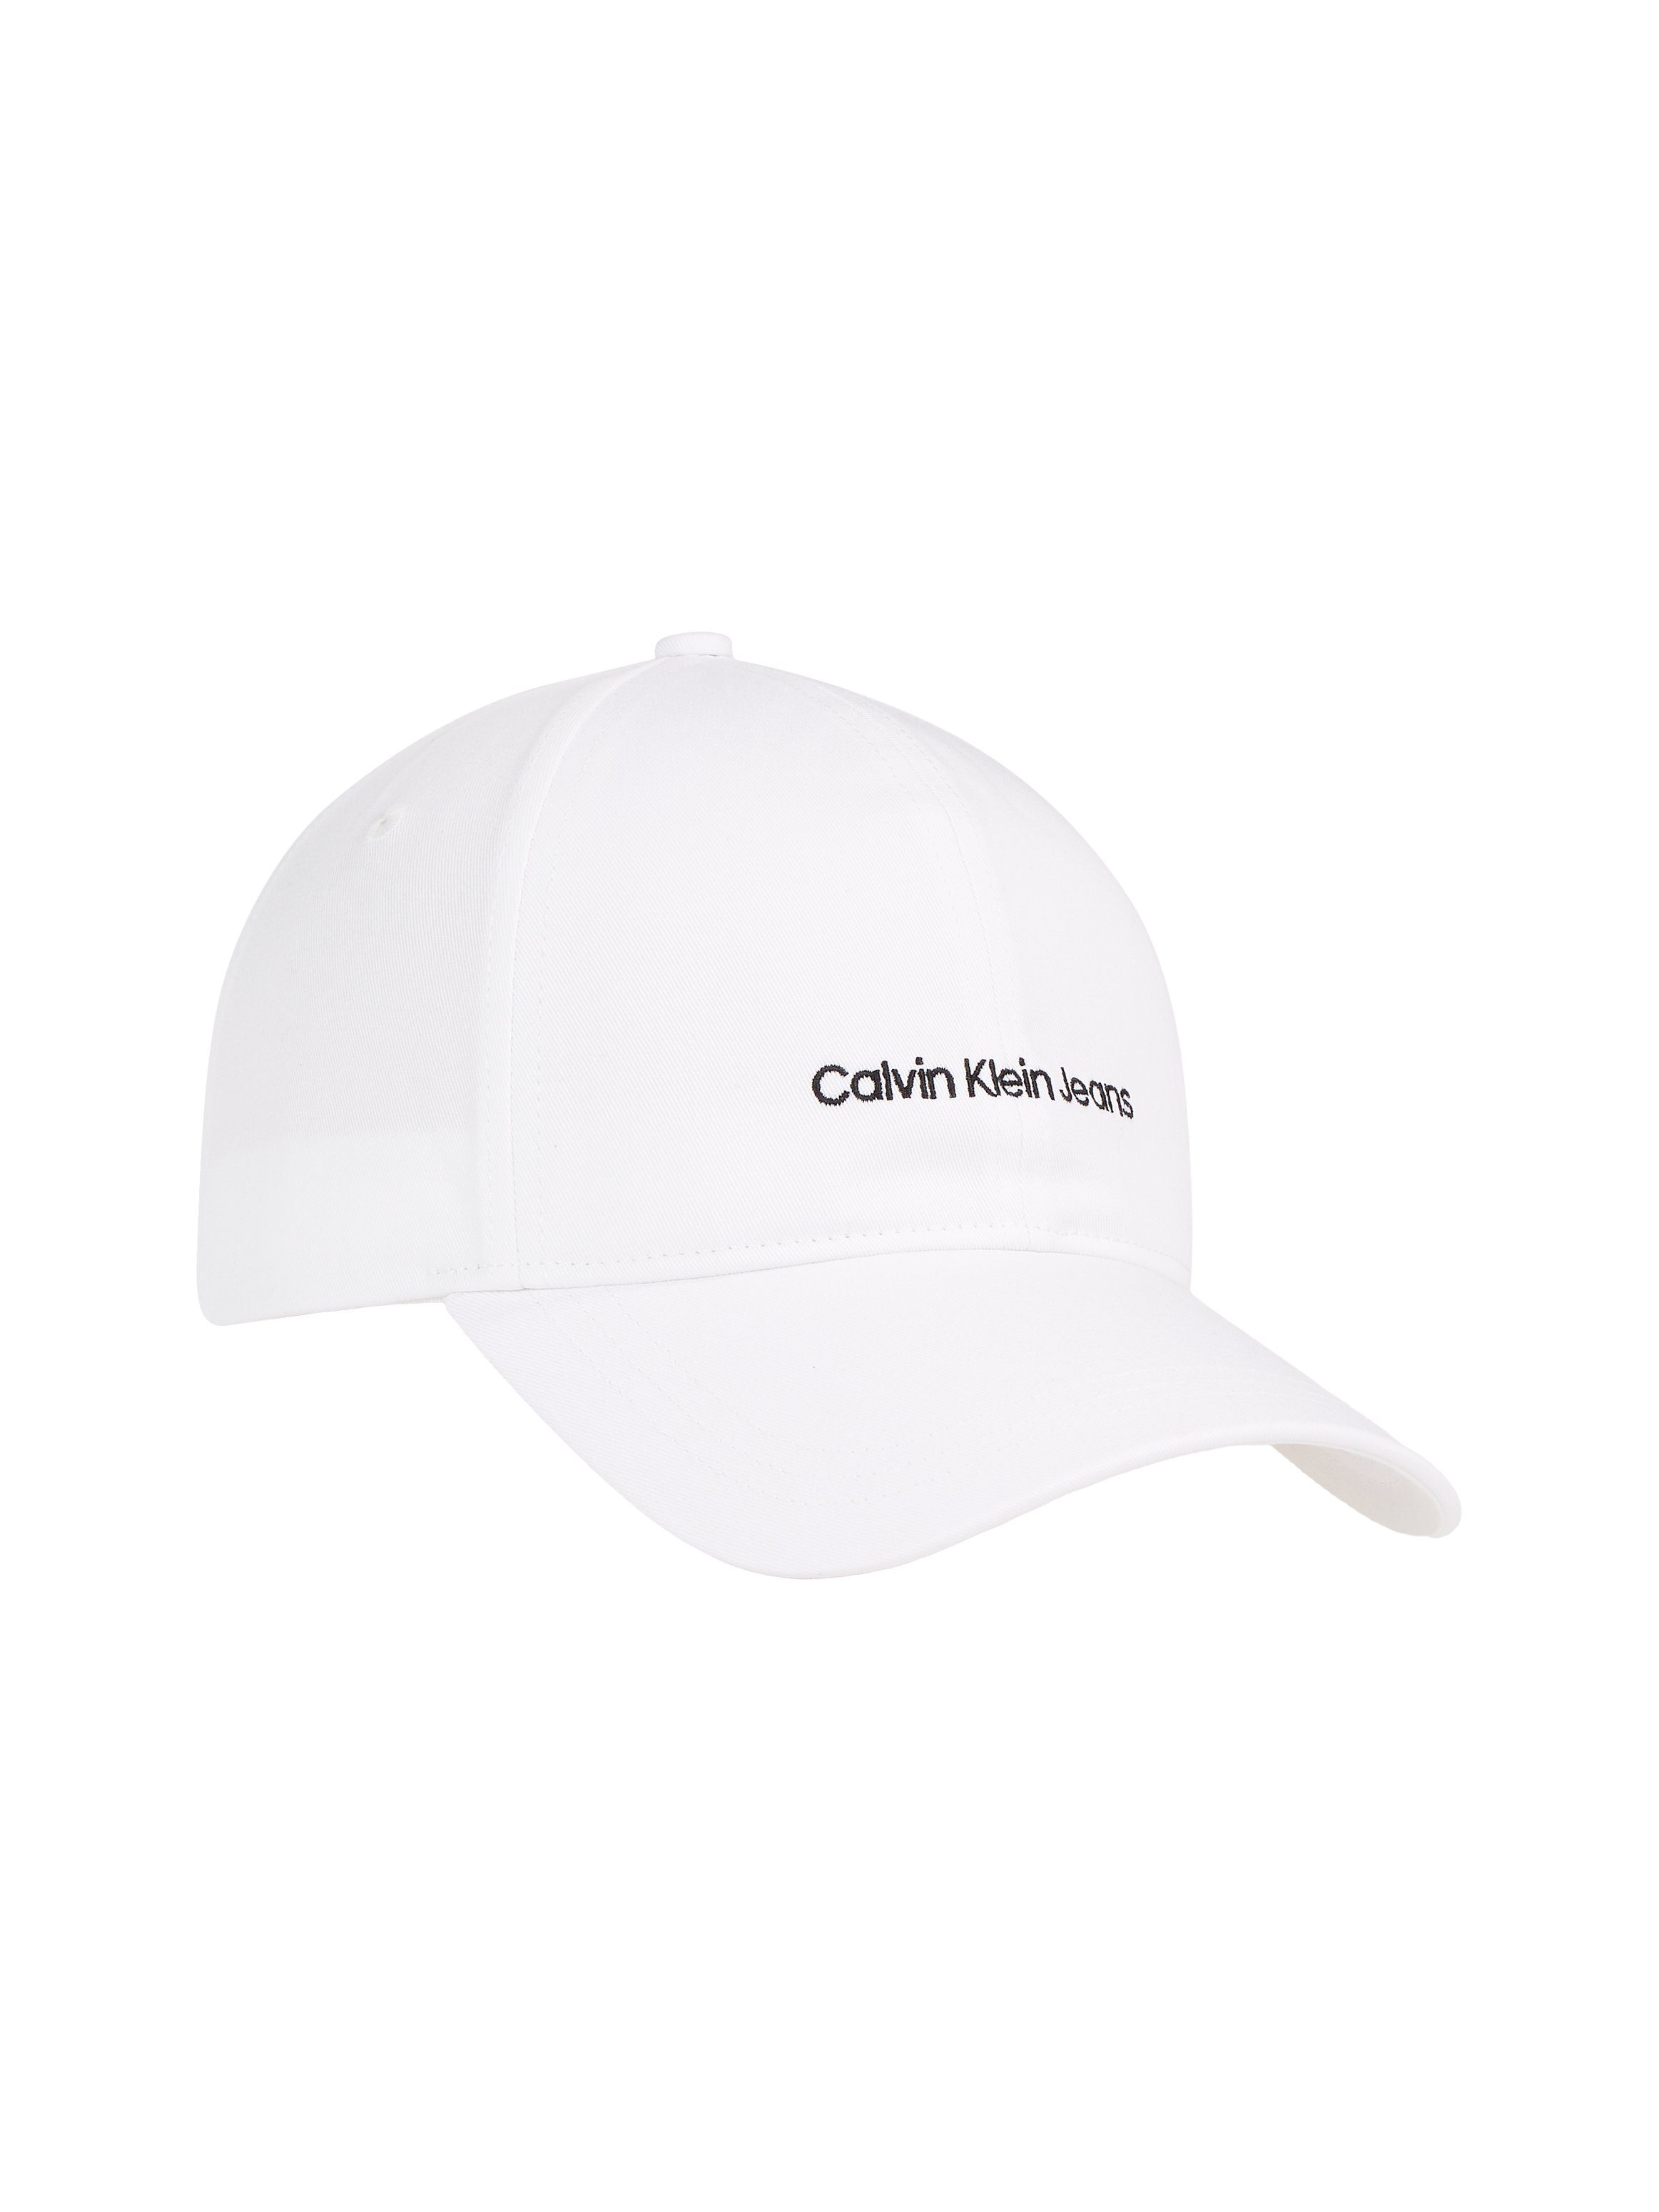 Jeans INSTITUTIONAL White Klein Calvin Baseball CAP Cap Bright